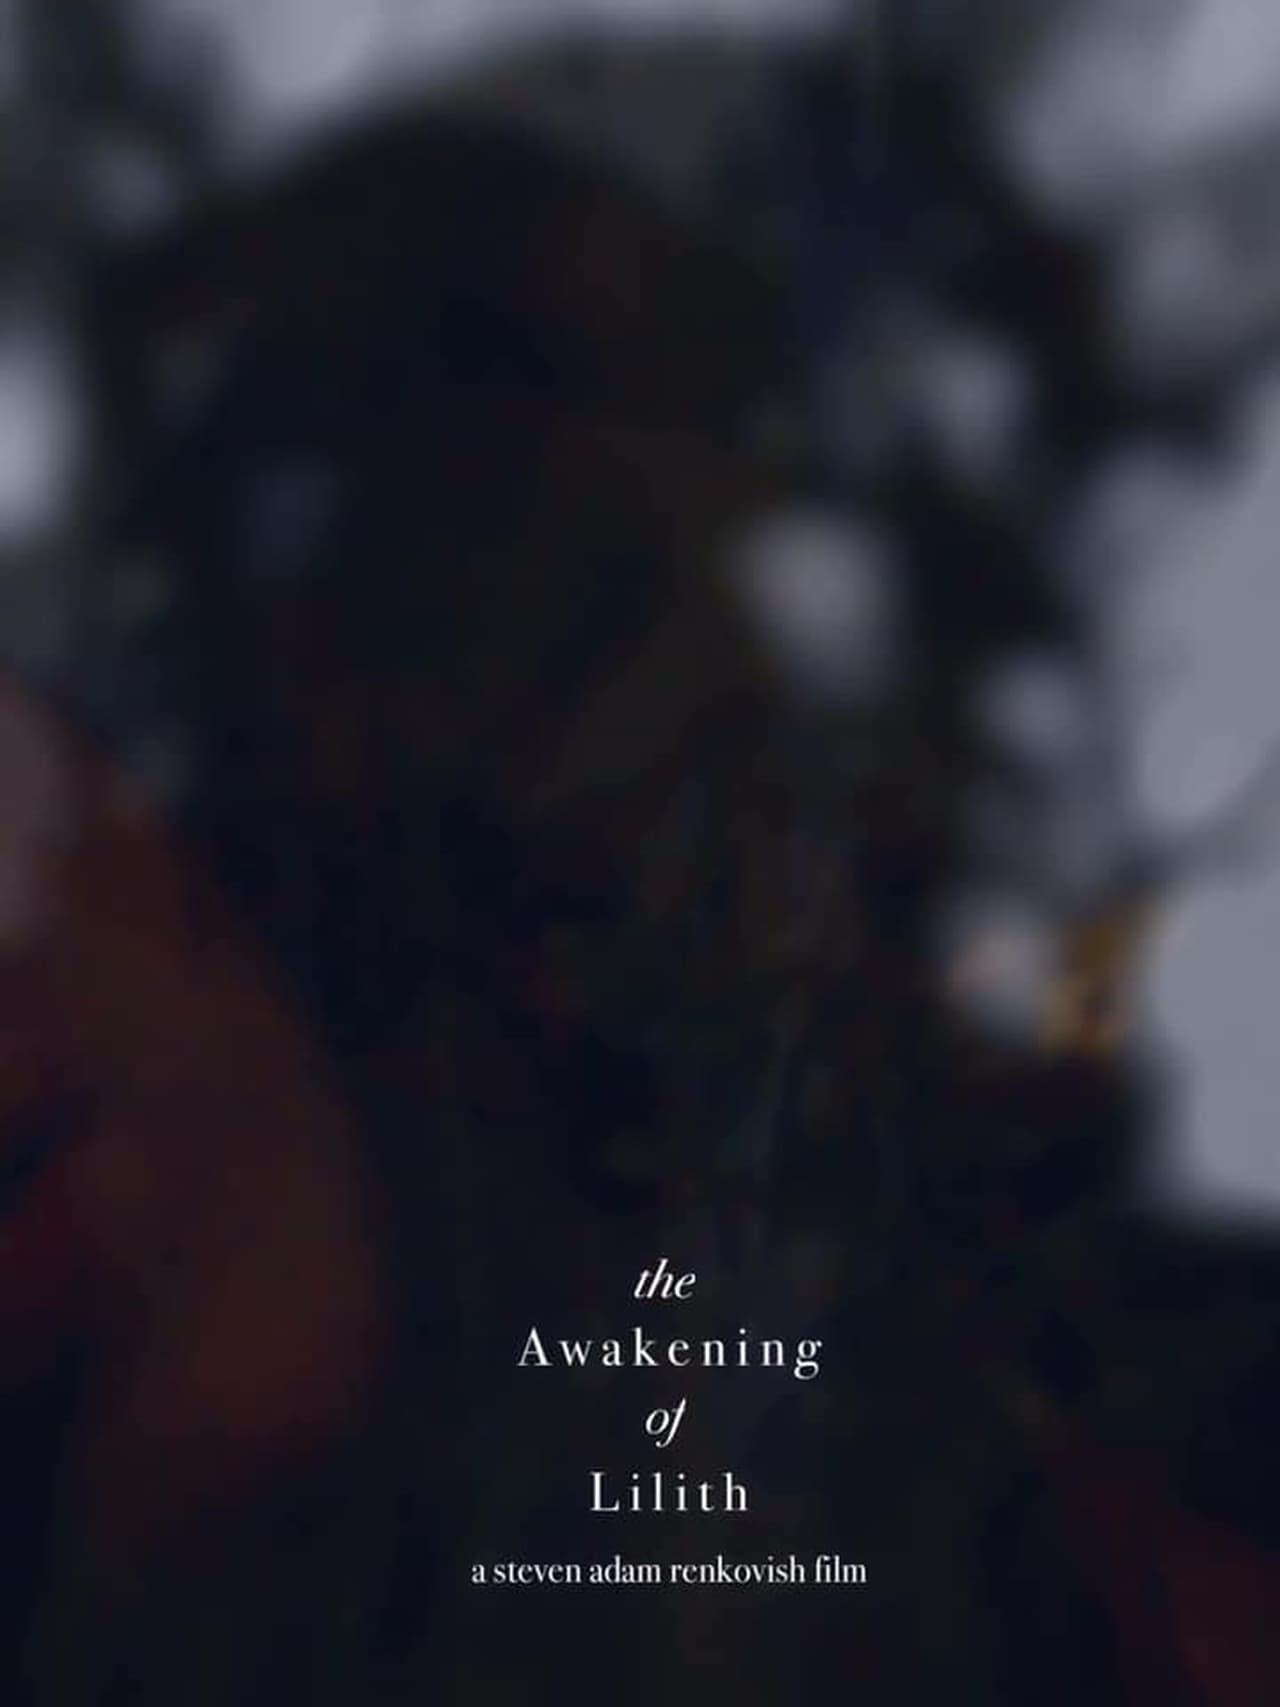 The Awakening of Lilith